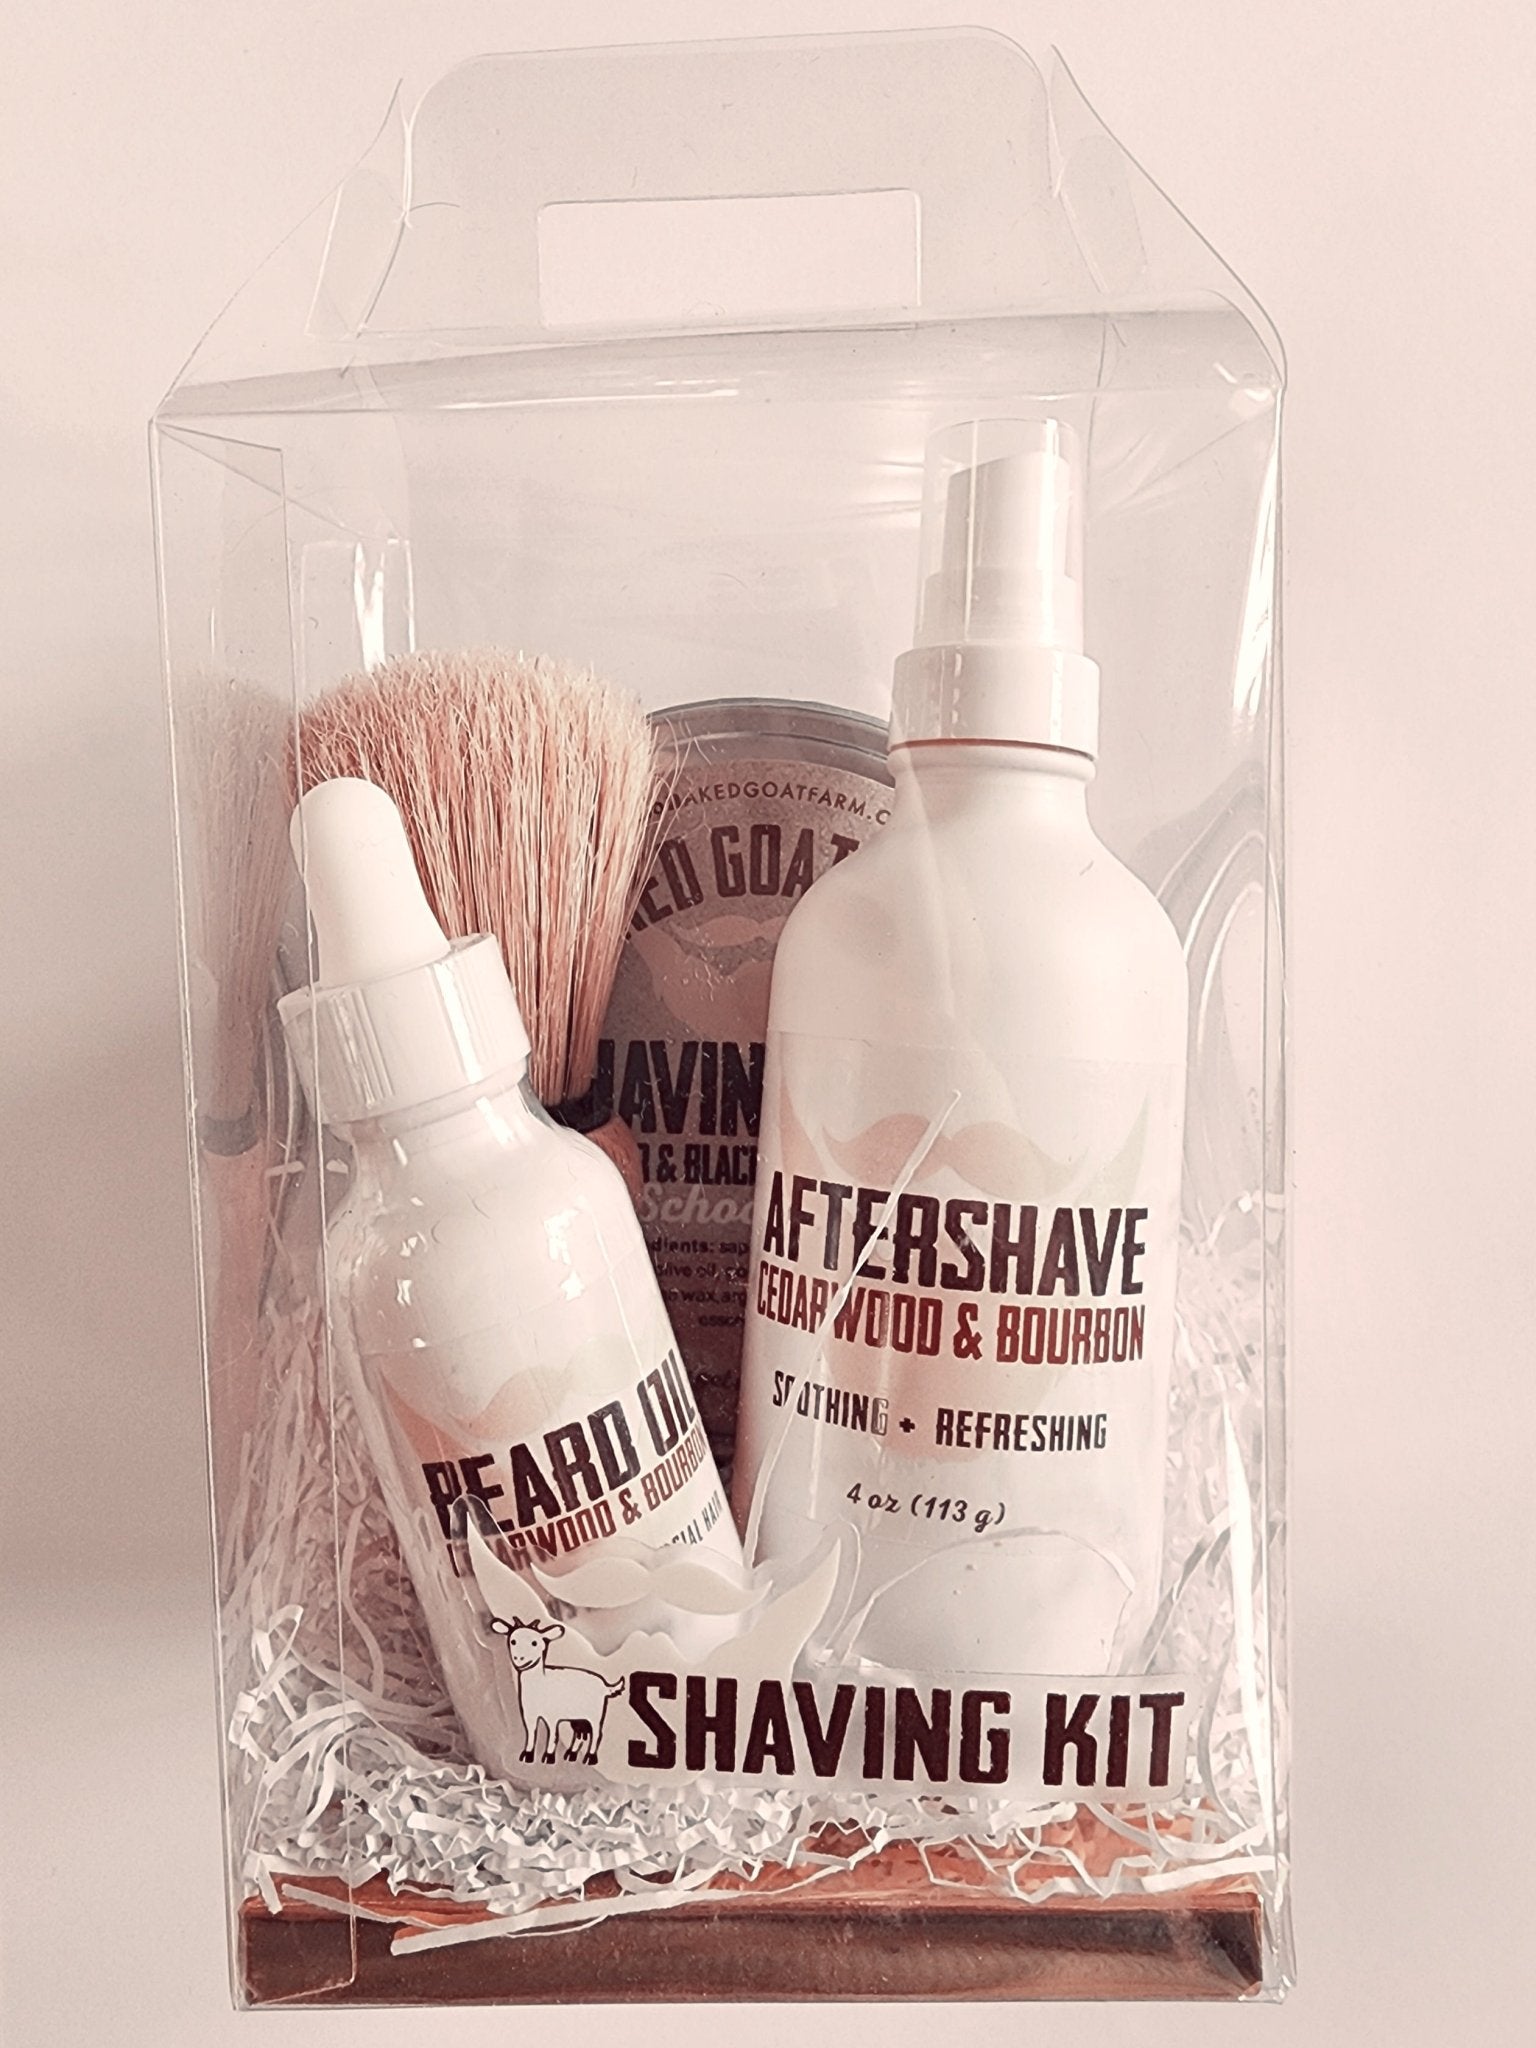 Shave kit - nakedgoatfarm